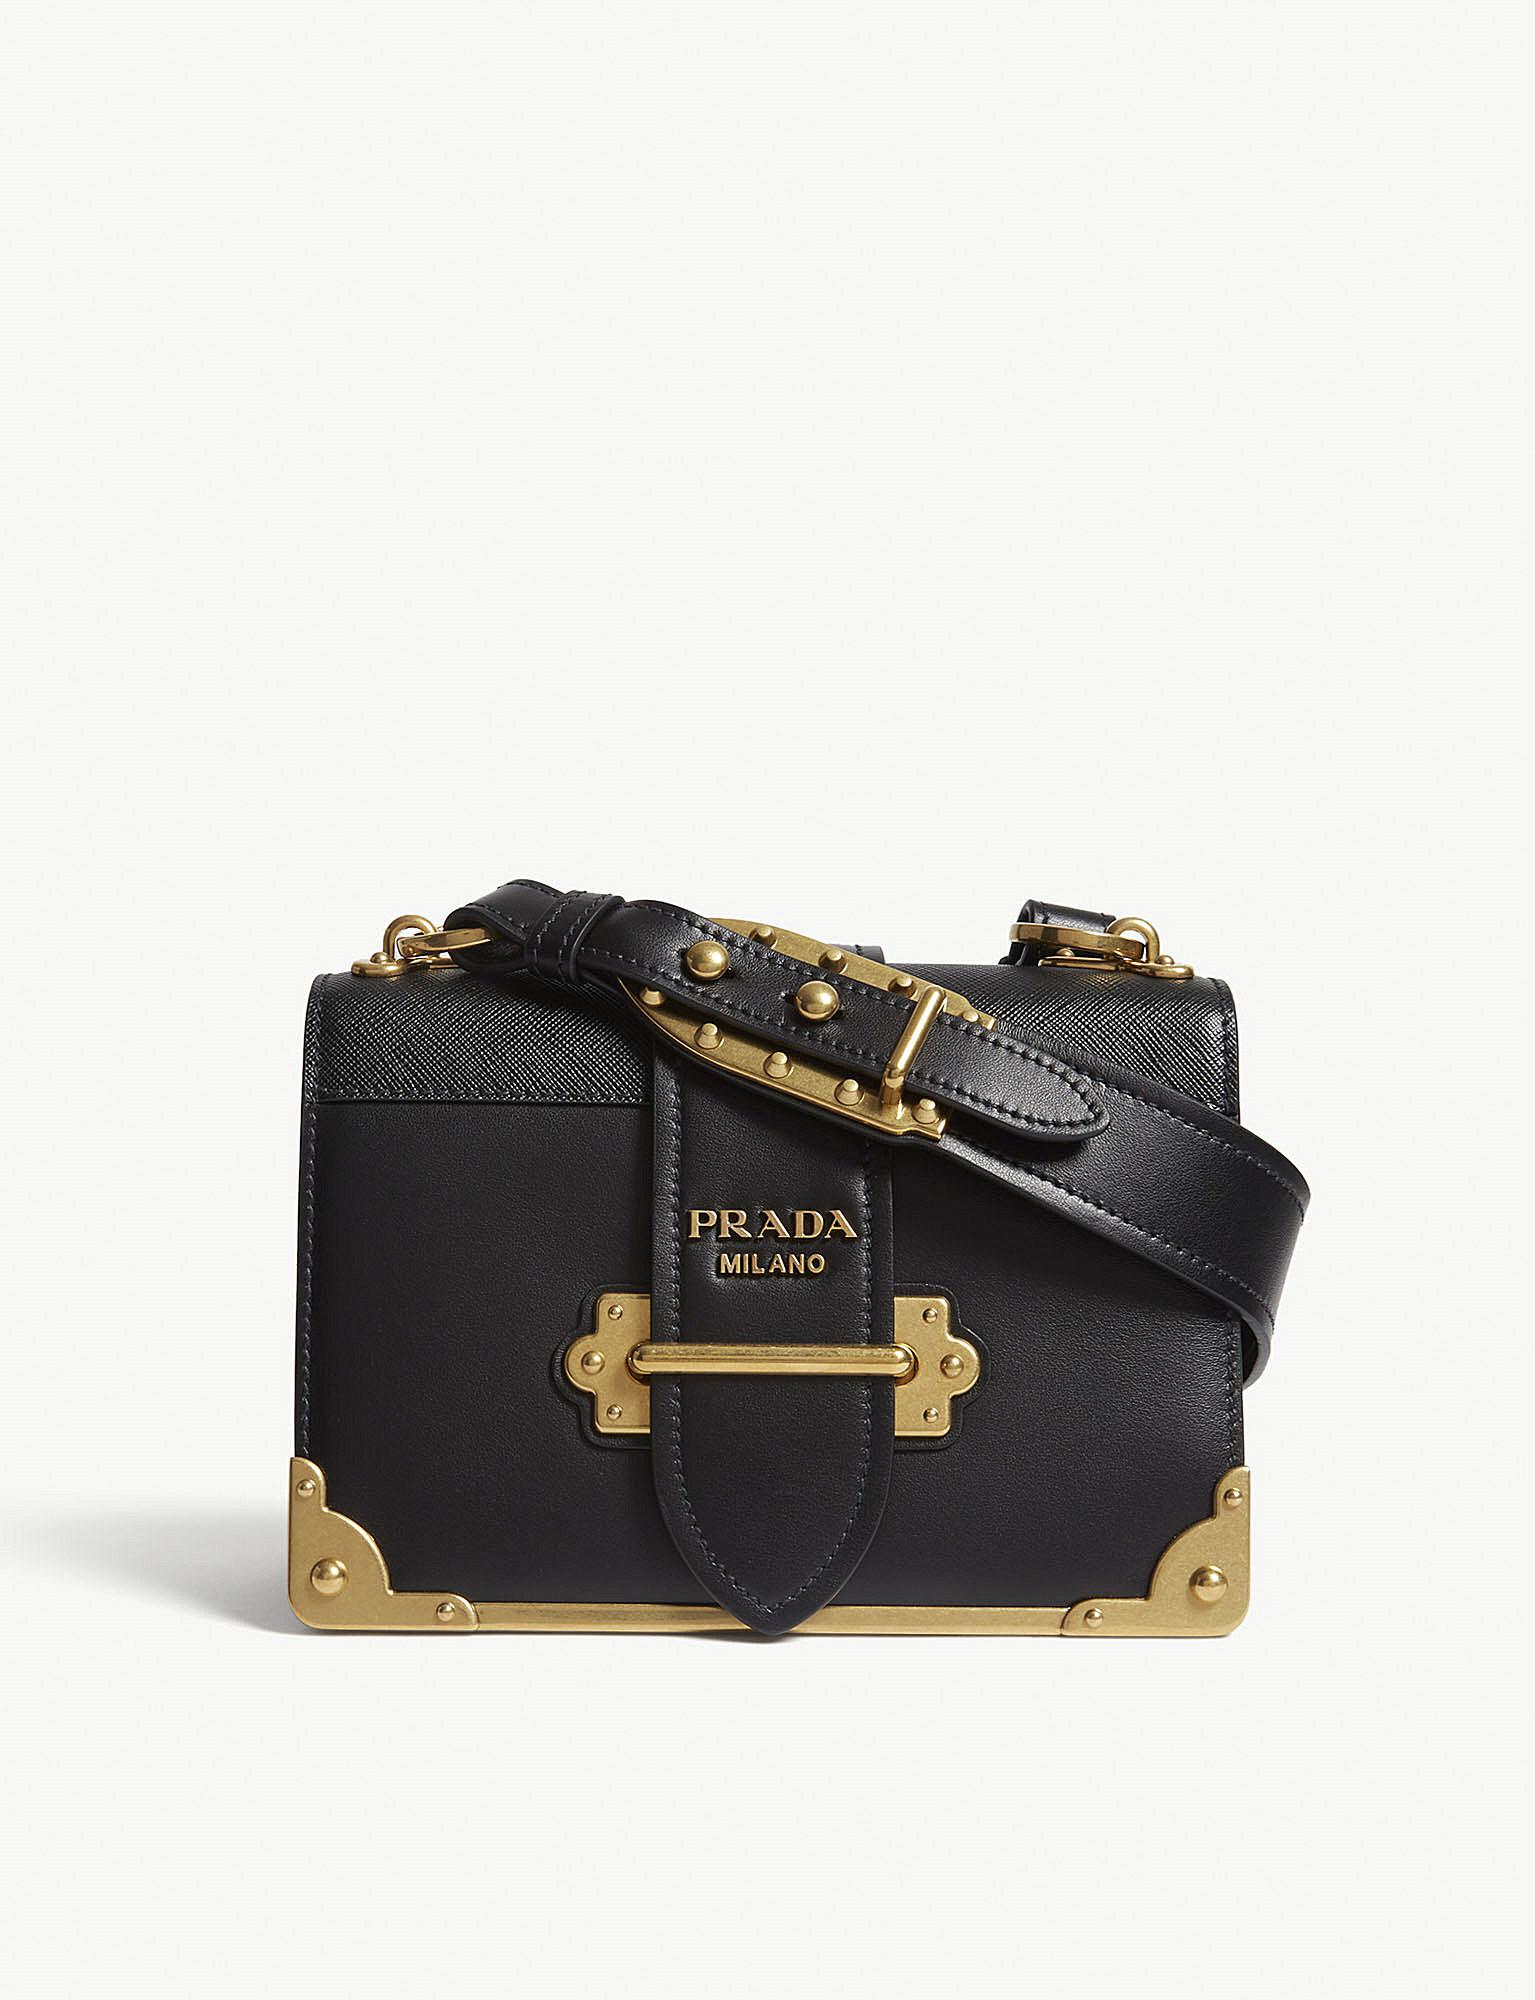 black prada bag with gold hardware